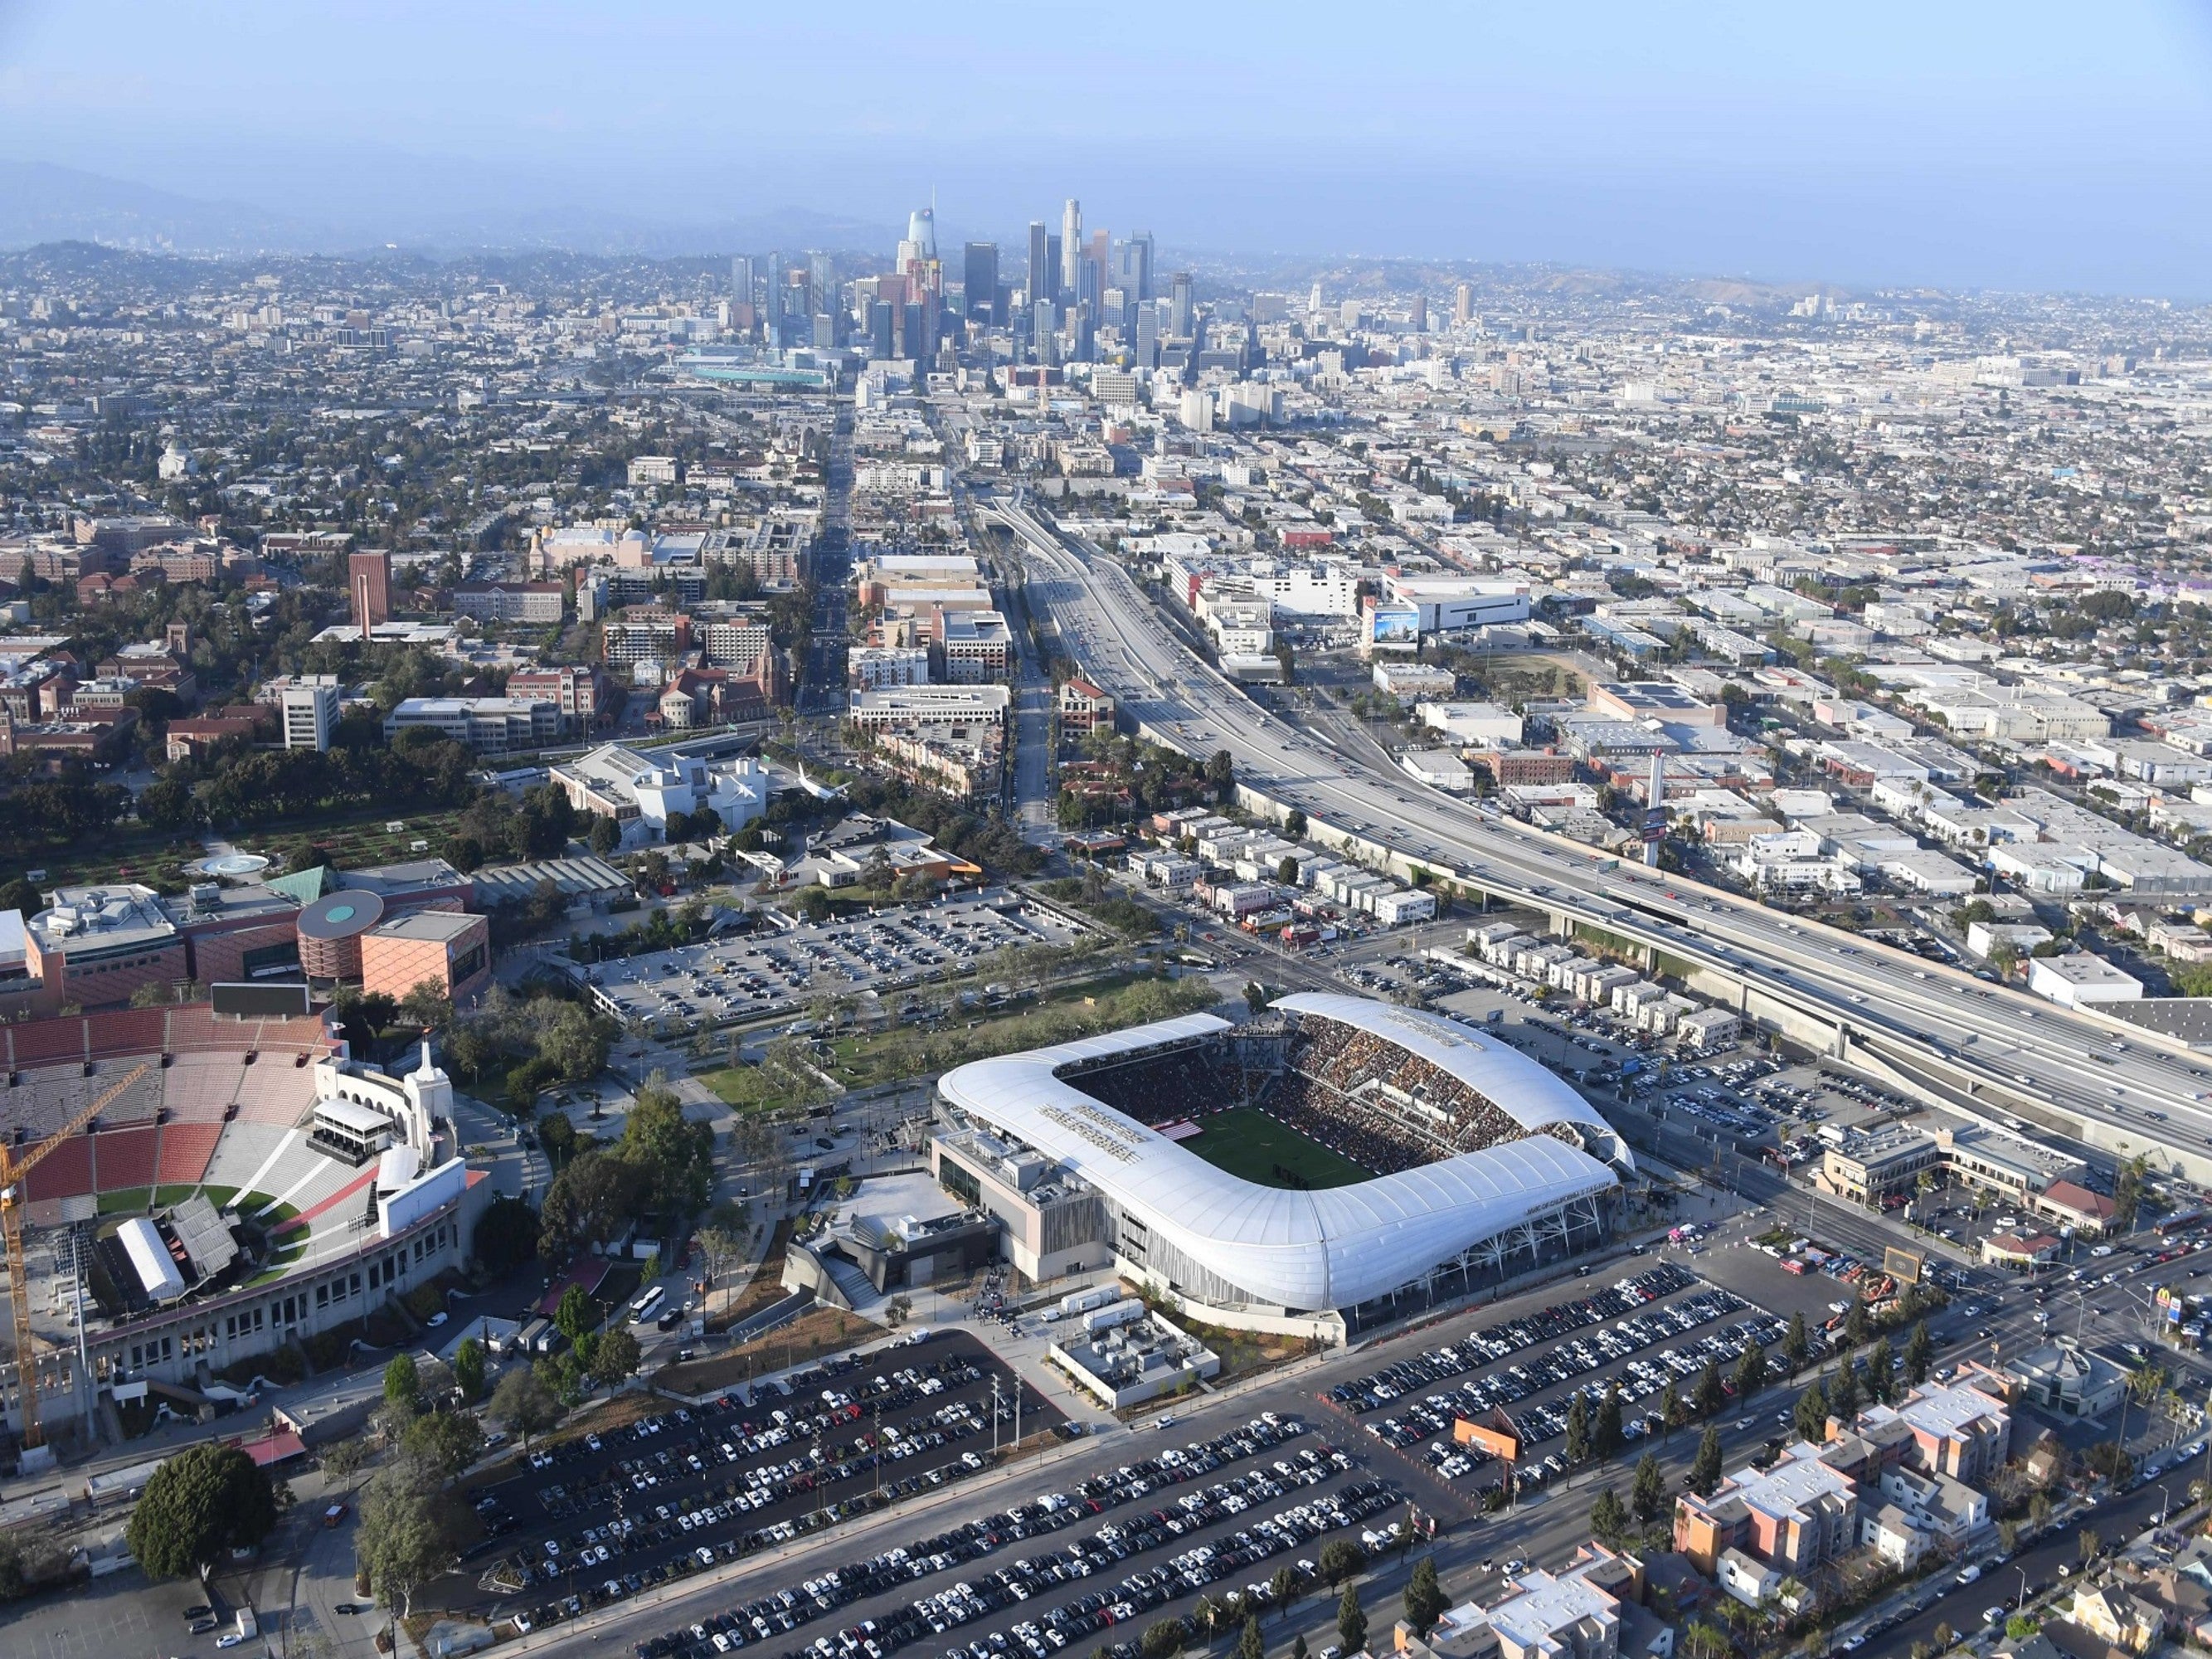 Los Angeles Football Club/BMO Stadium | Discover Los Angeles